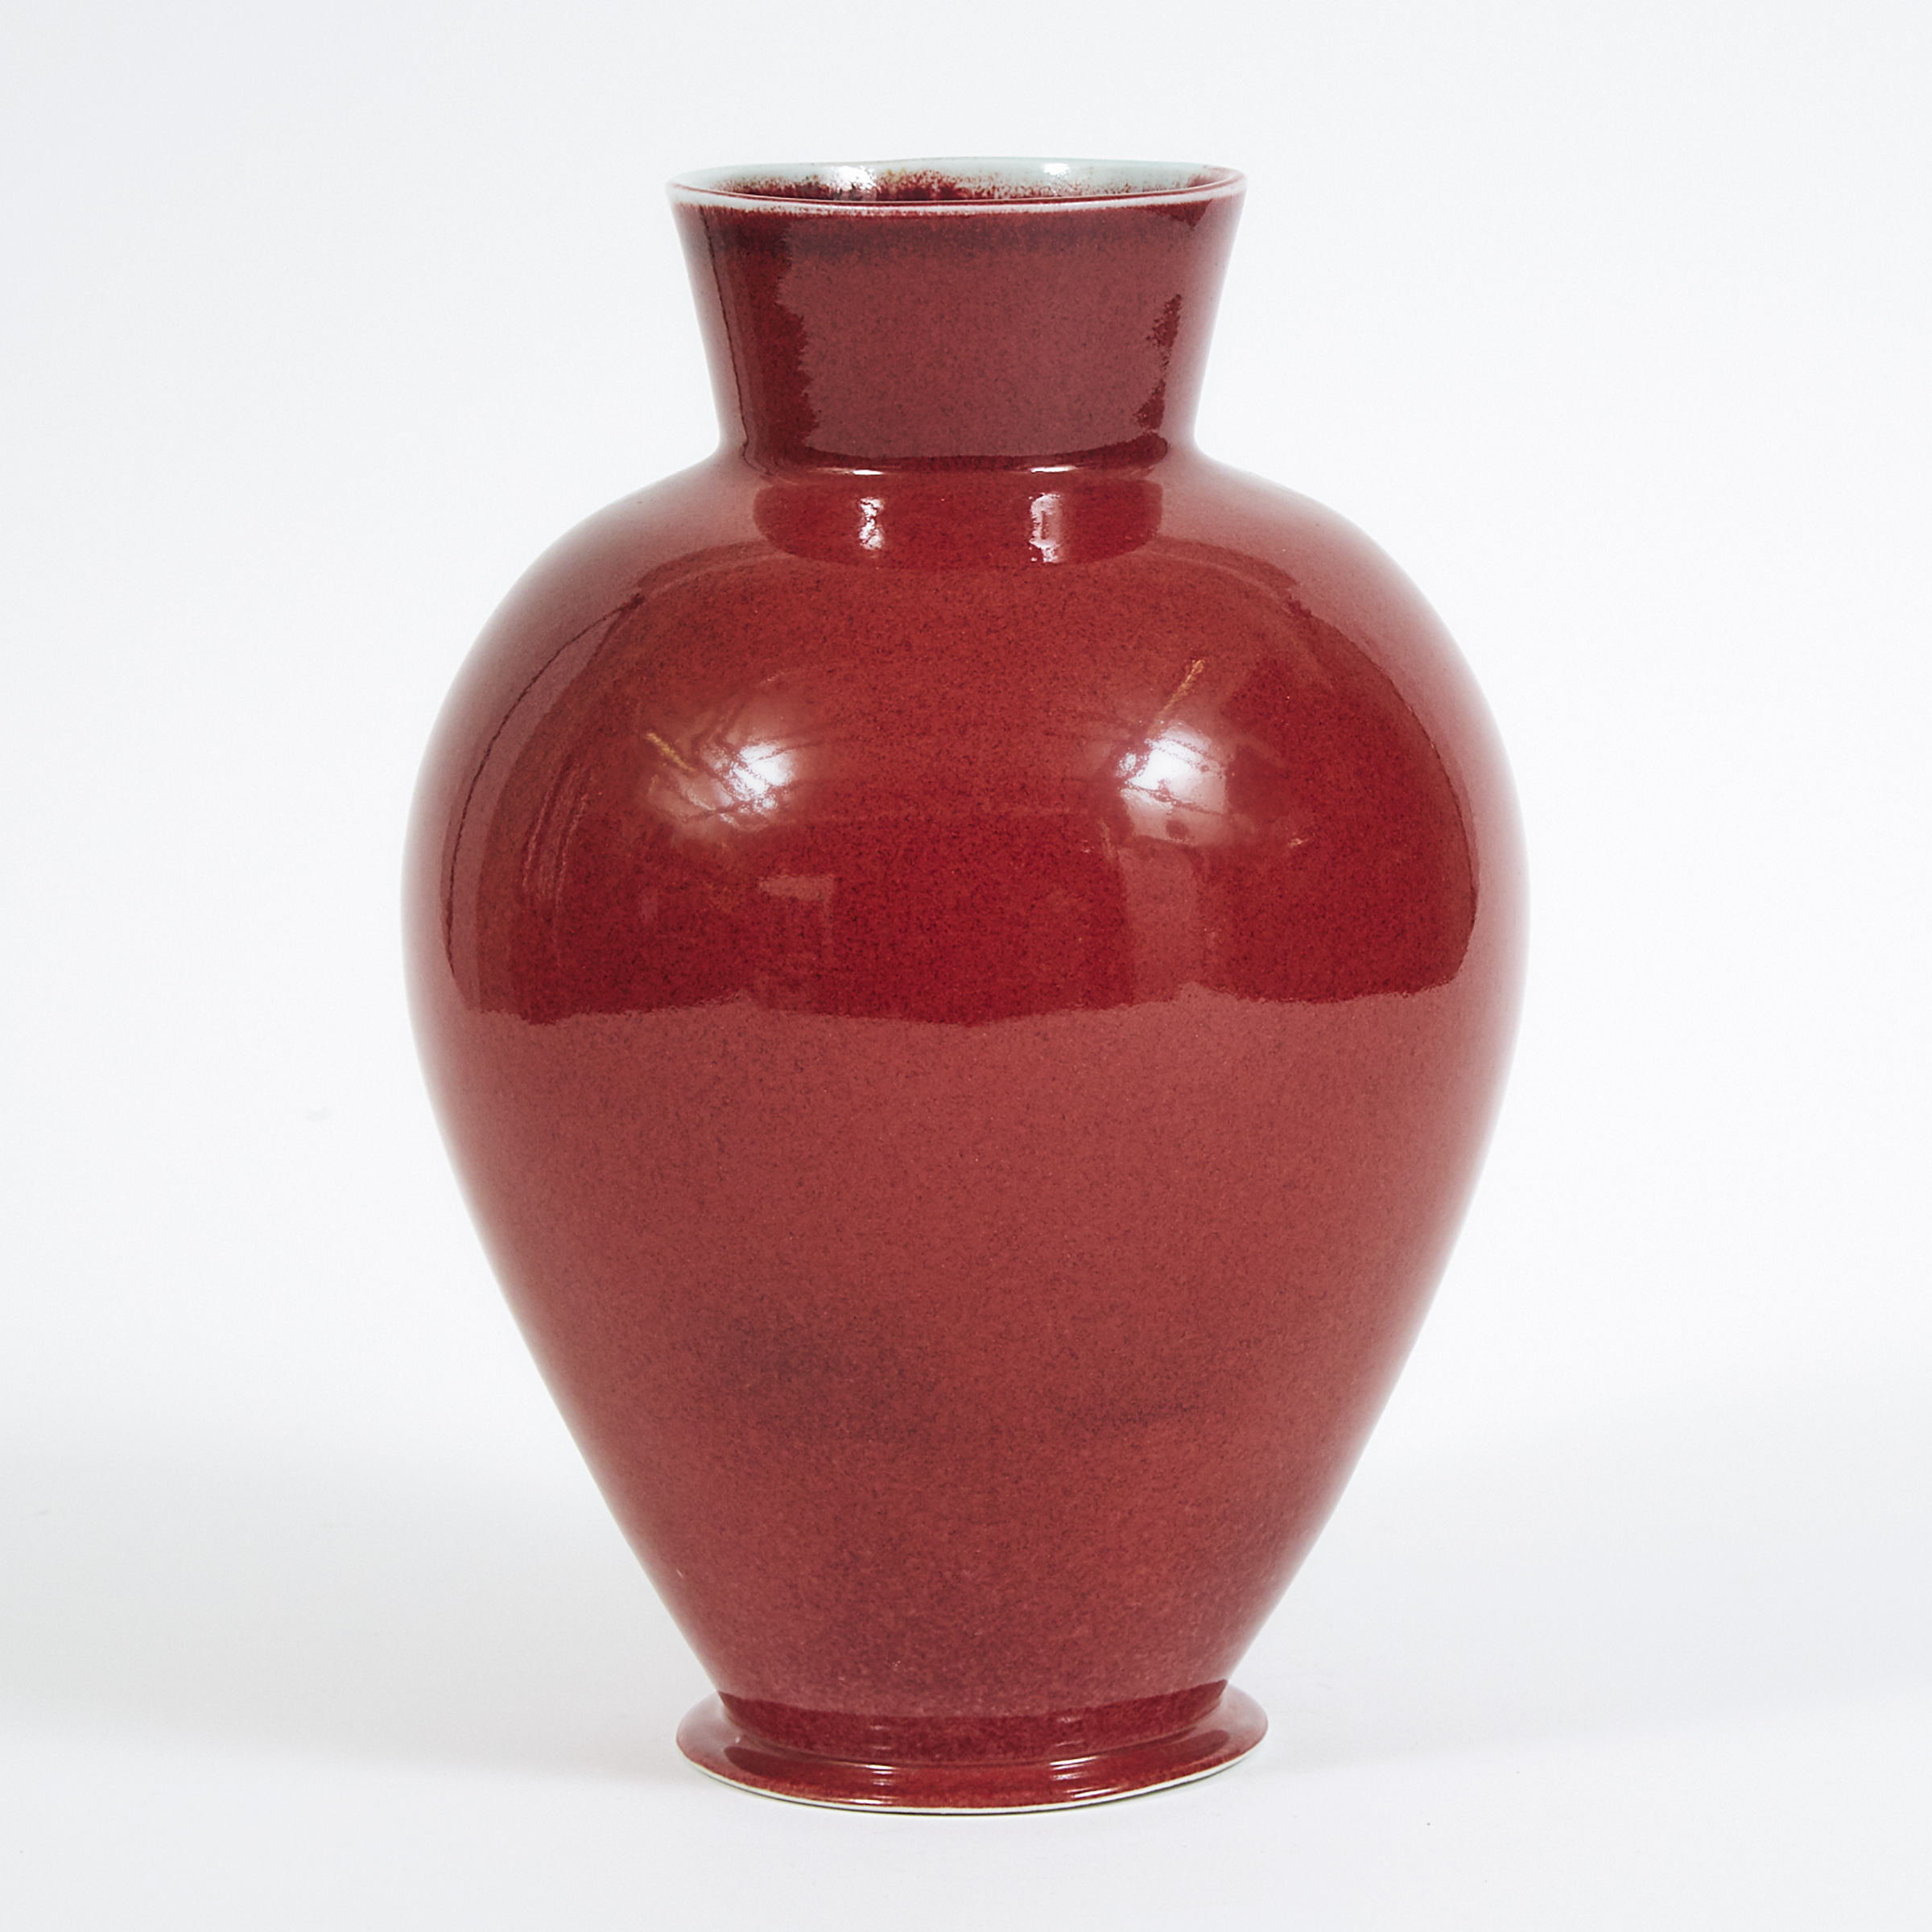 Harlan House (Canadian, b.1943), Oxblood and Celadon Glazed Vase, 1989